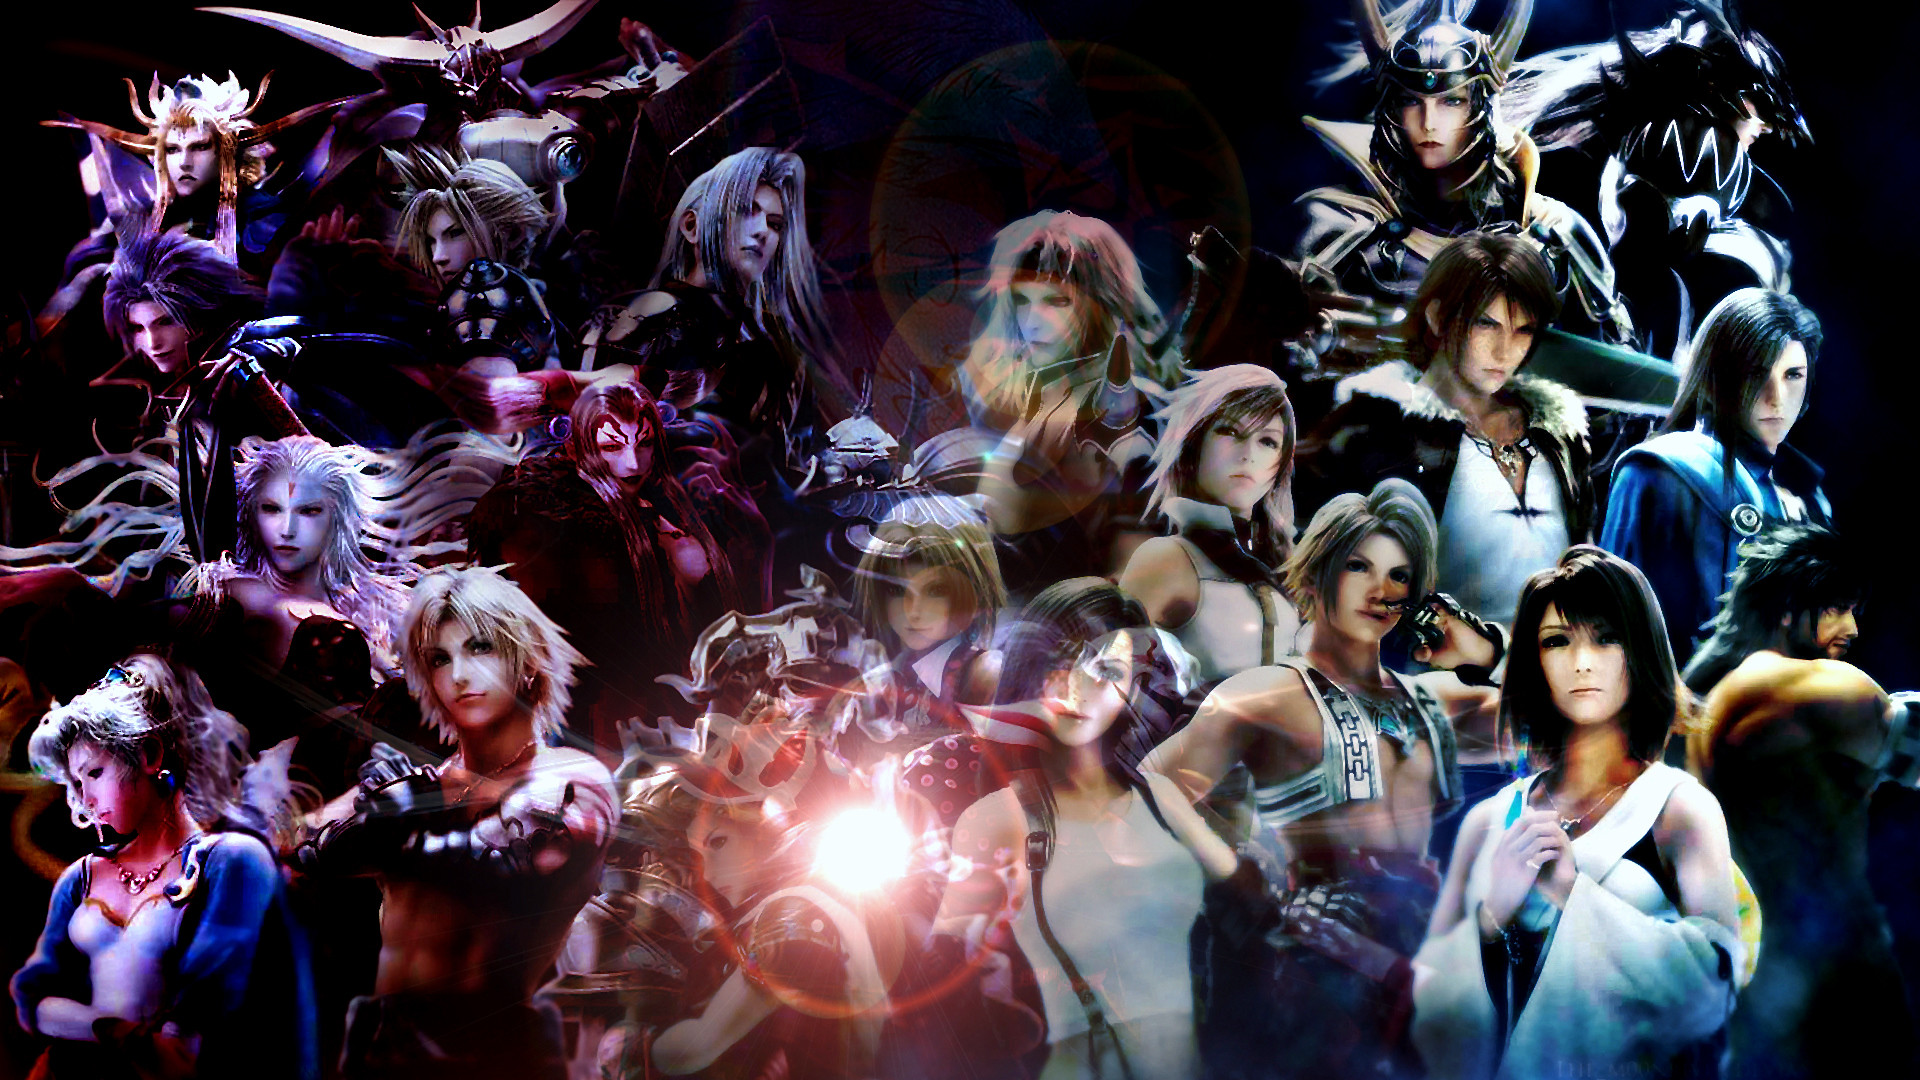 1920x1080 Tags: Anime, Final Fantasy VII, Final Fantasy VIII, Final Fantasy XIII,